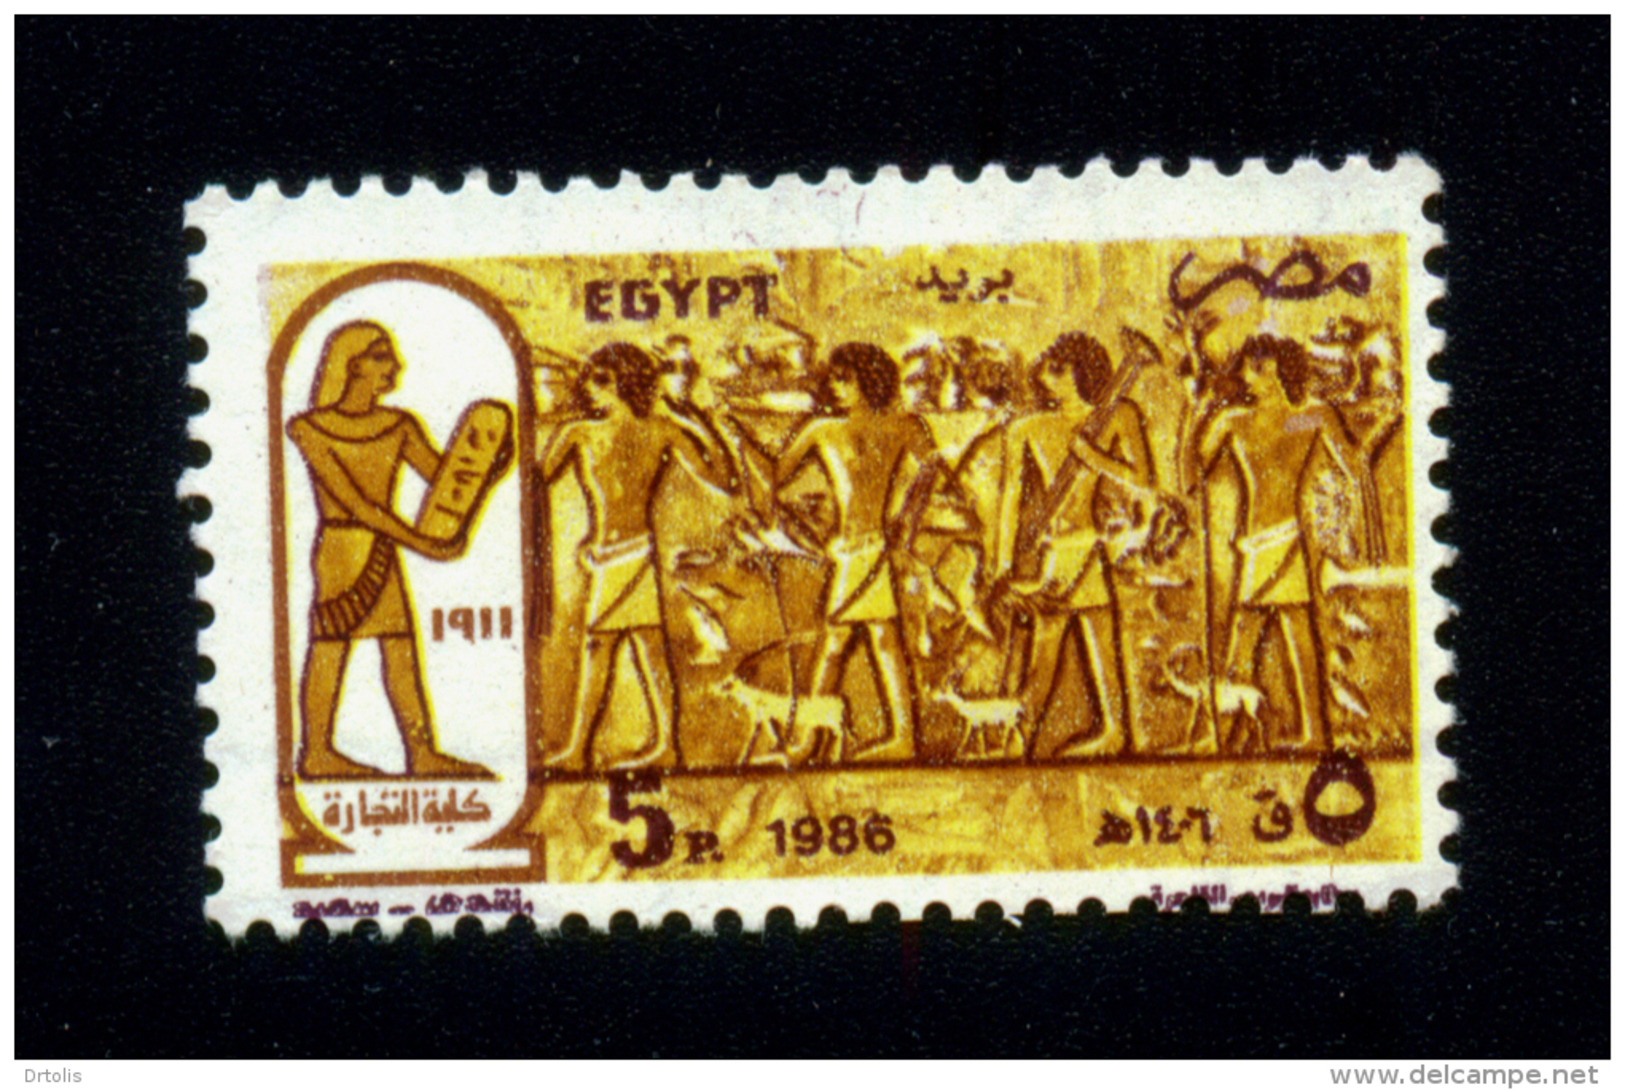 EGYPT / 1986 / FACULTY OF COMMERCE ; CAIRO UNIVERSITY / TOMB PAINTING ( BTAHHOTTEB ) ; SAKKARA / MNH / VF - Ungebraucht